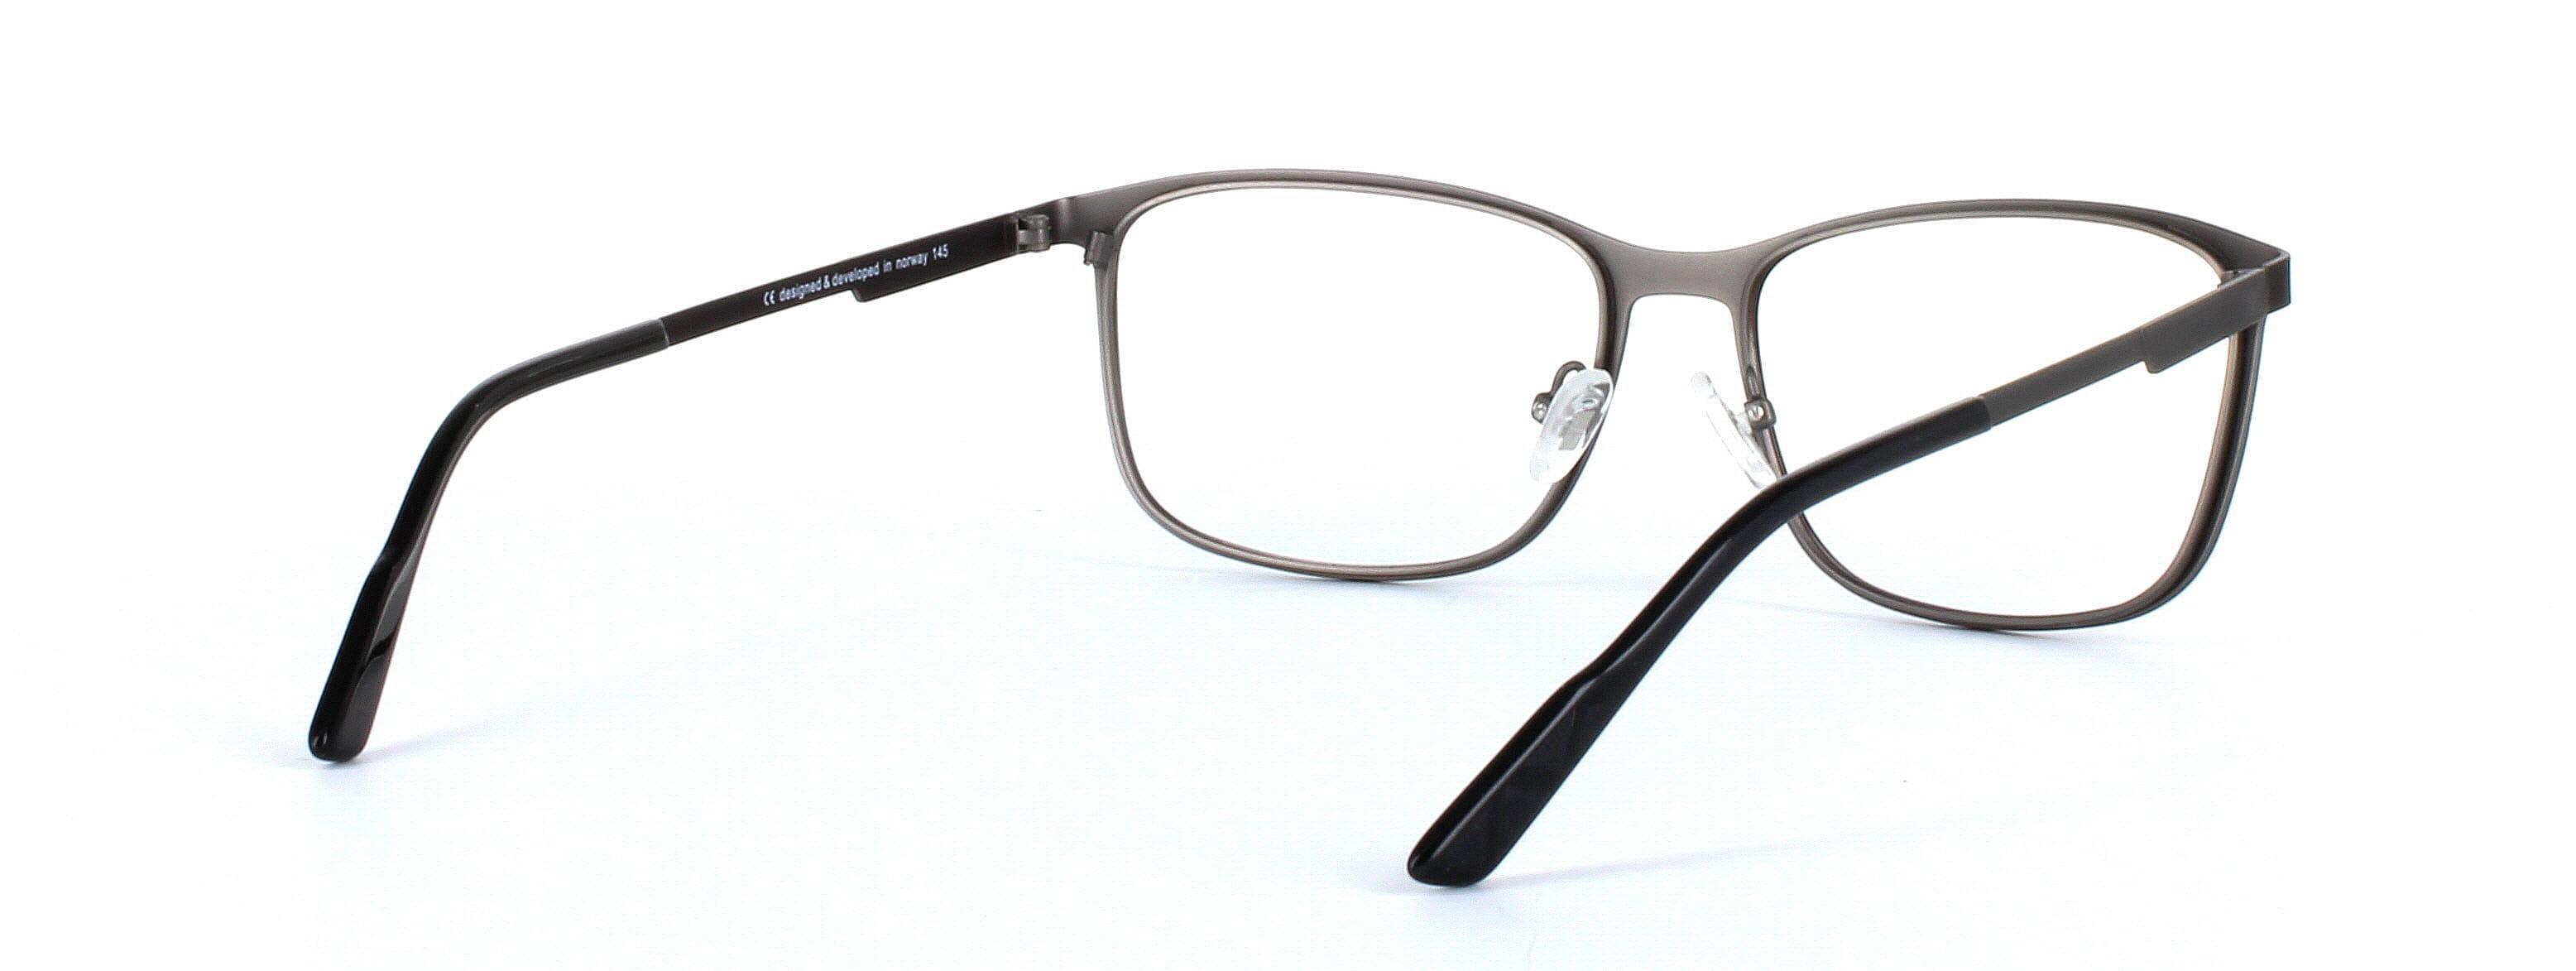 Helly Hansen HH 1013 Brown Full Rim Rectangular Square Metal Glasses - Image View 4